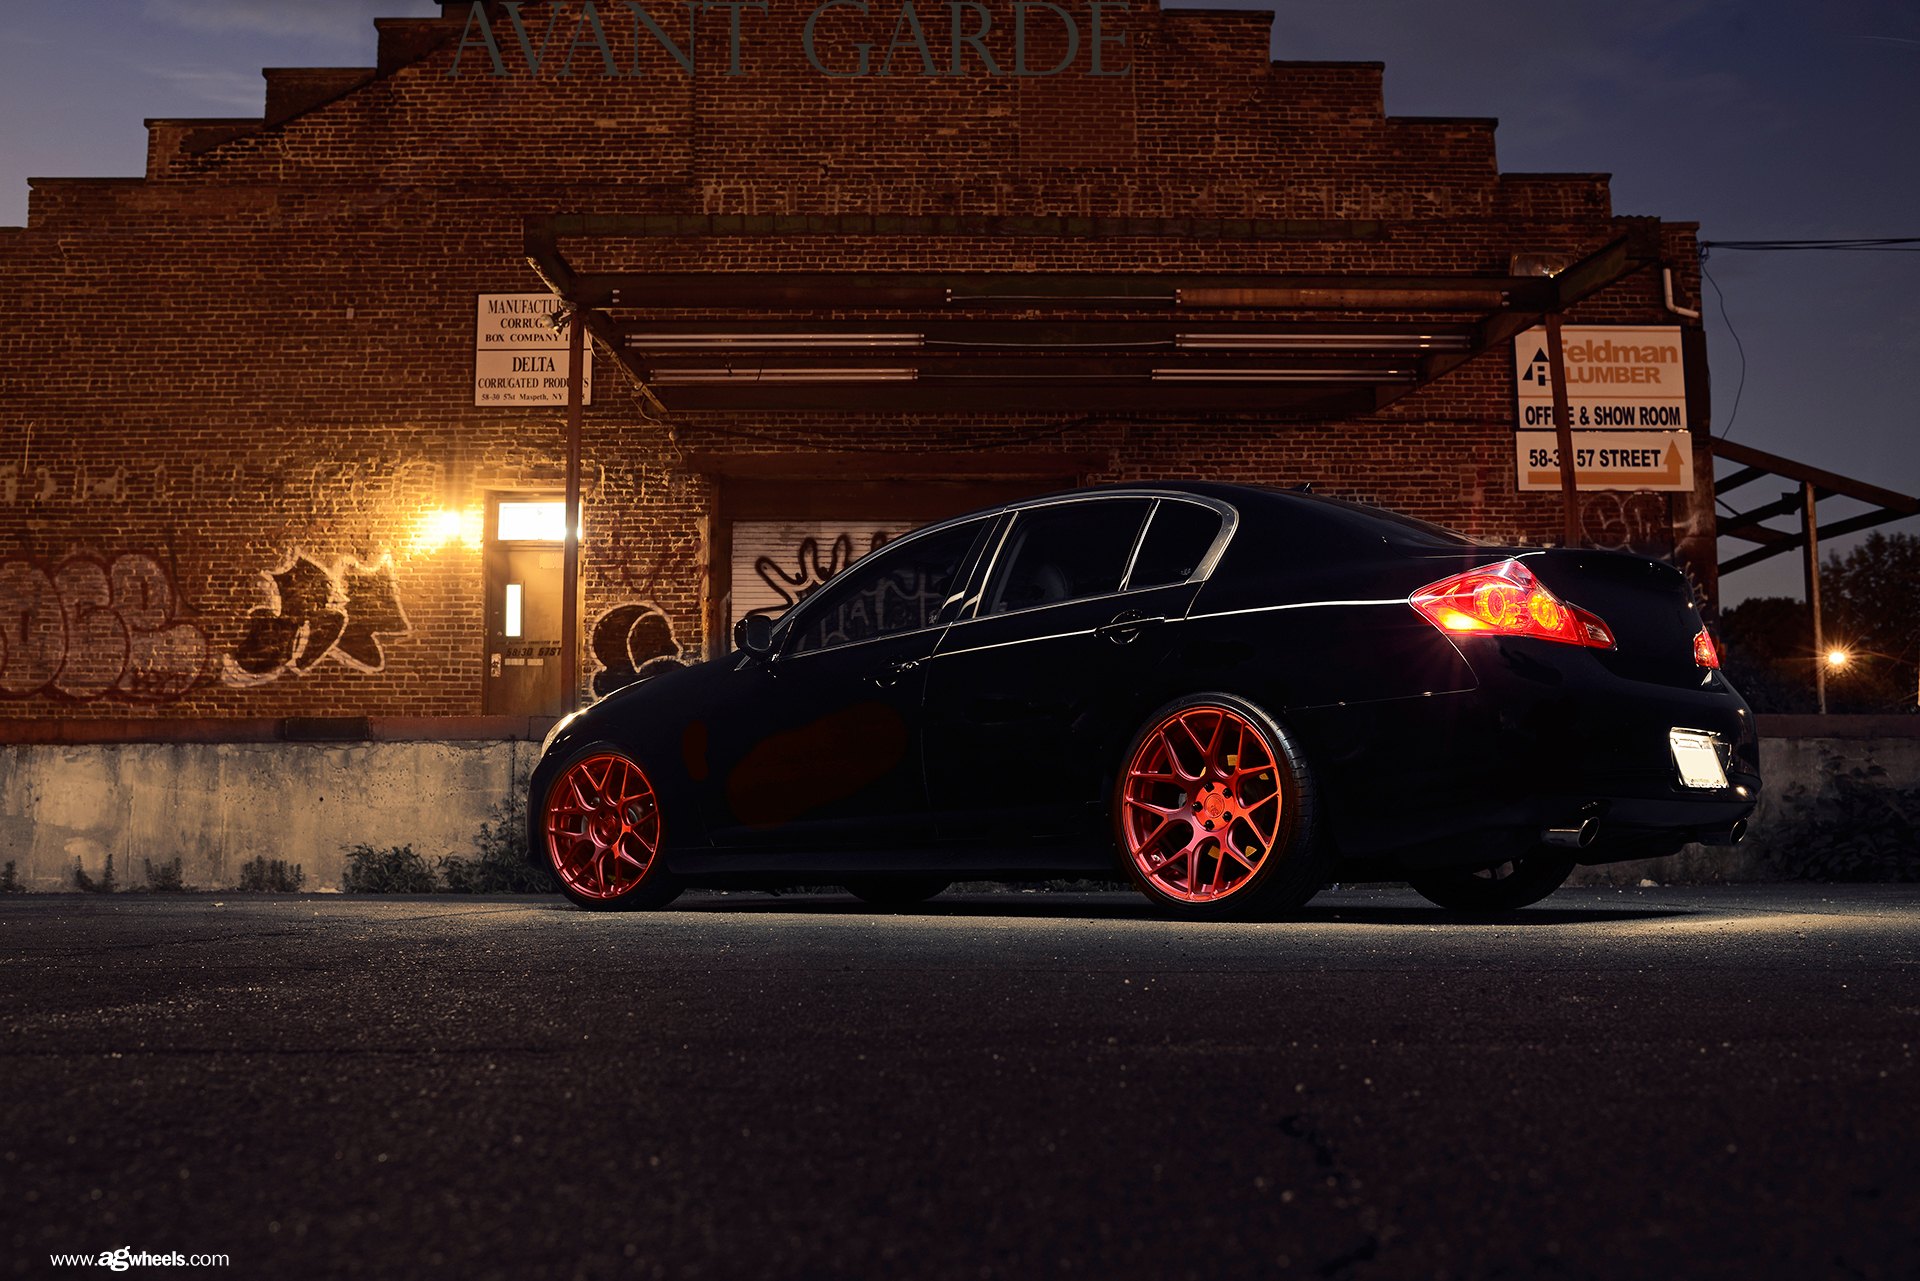 Aftermarket Taillights on Black Infiniti G37 - Photo by Avant Garde Wheels